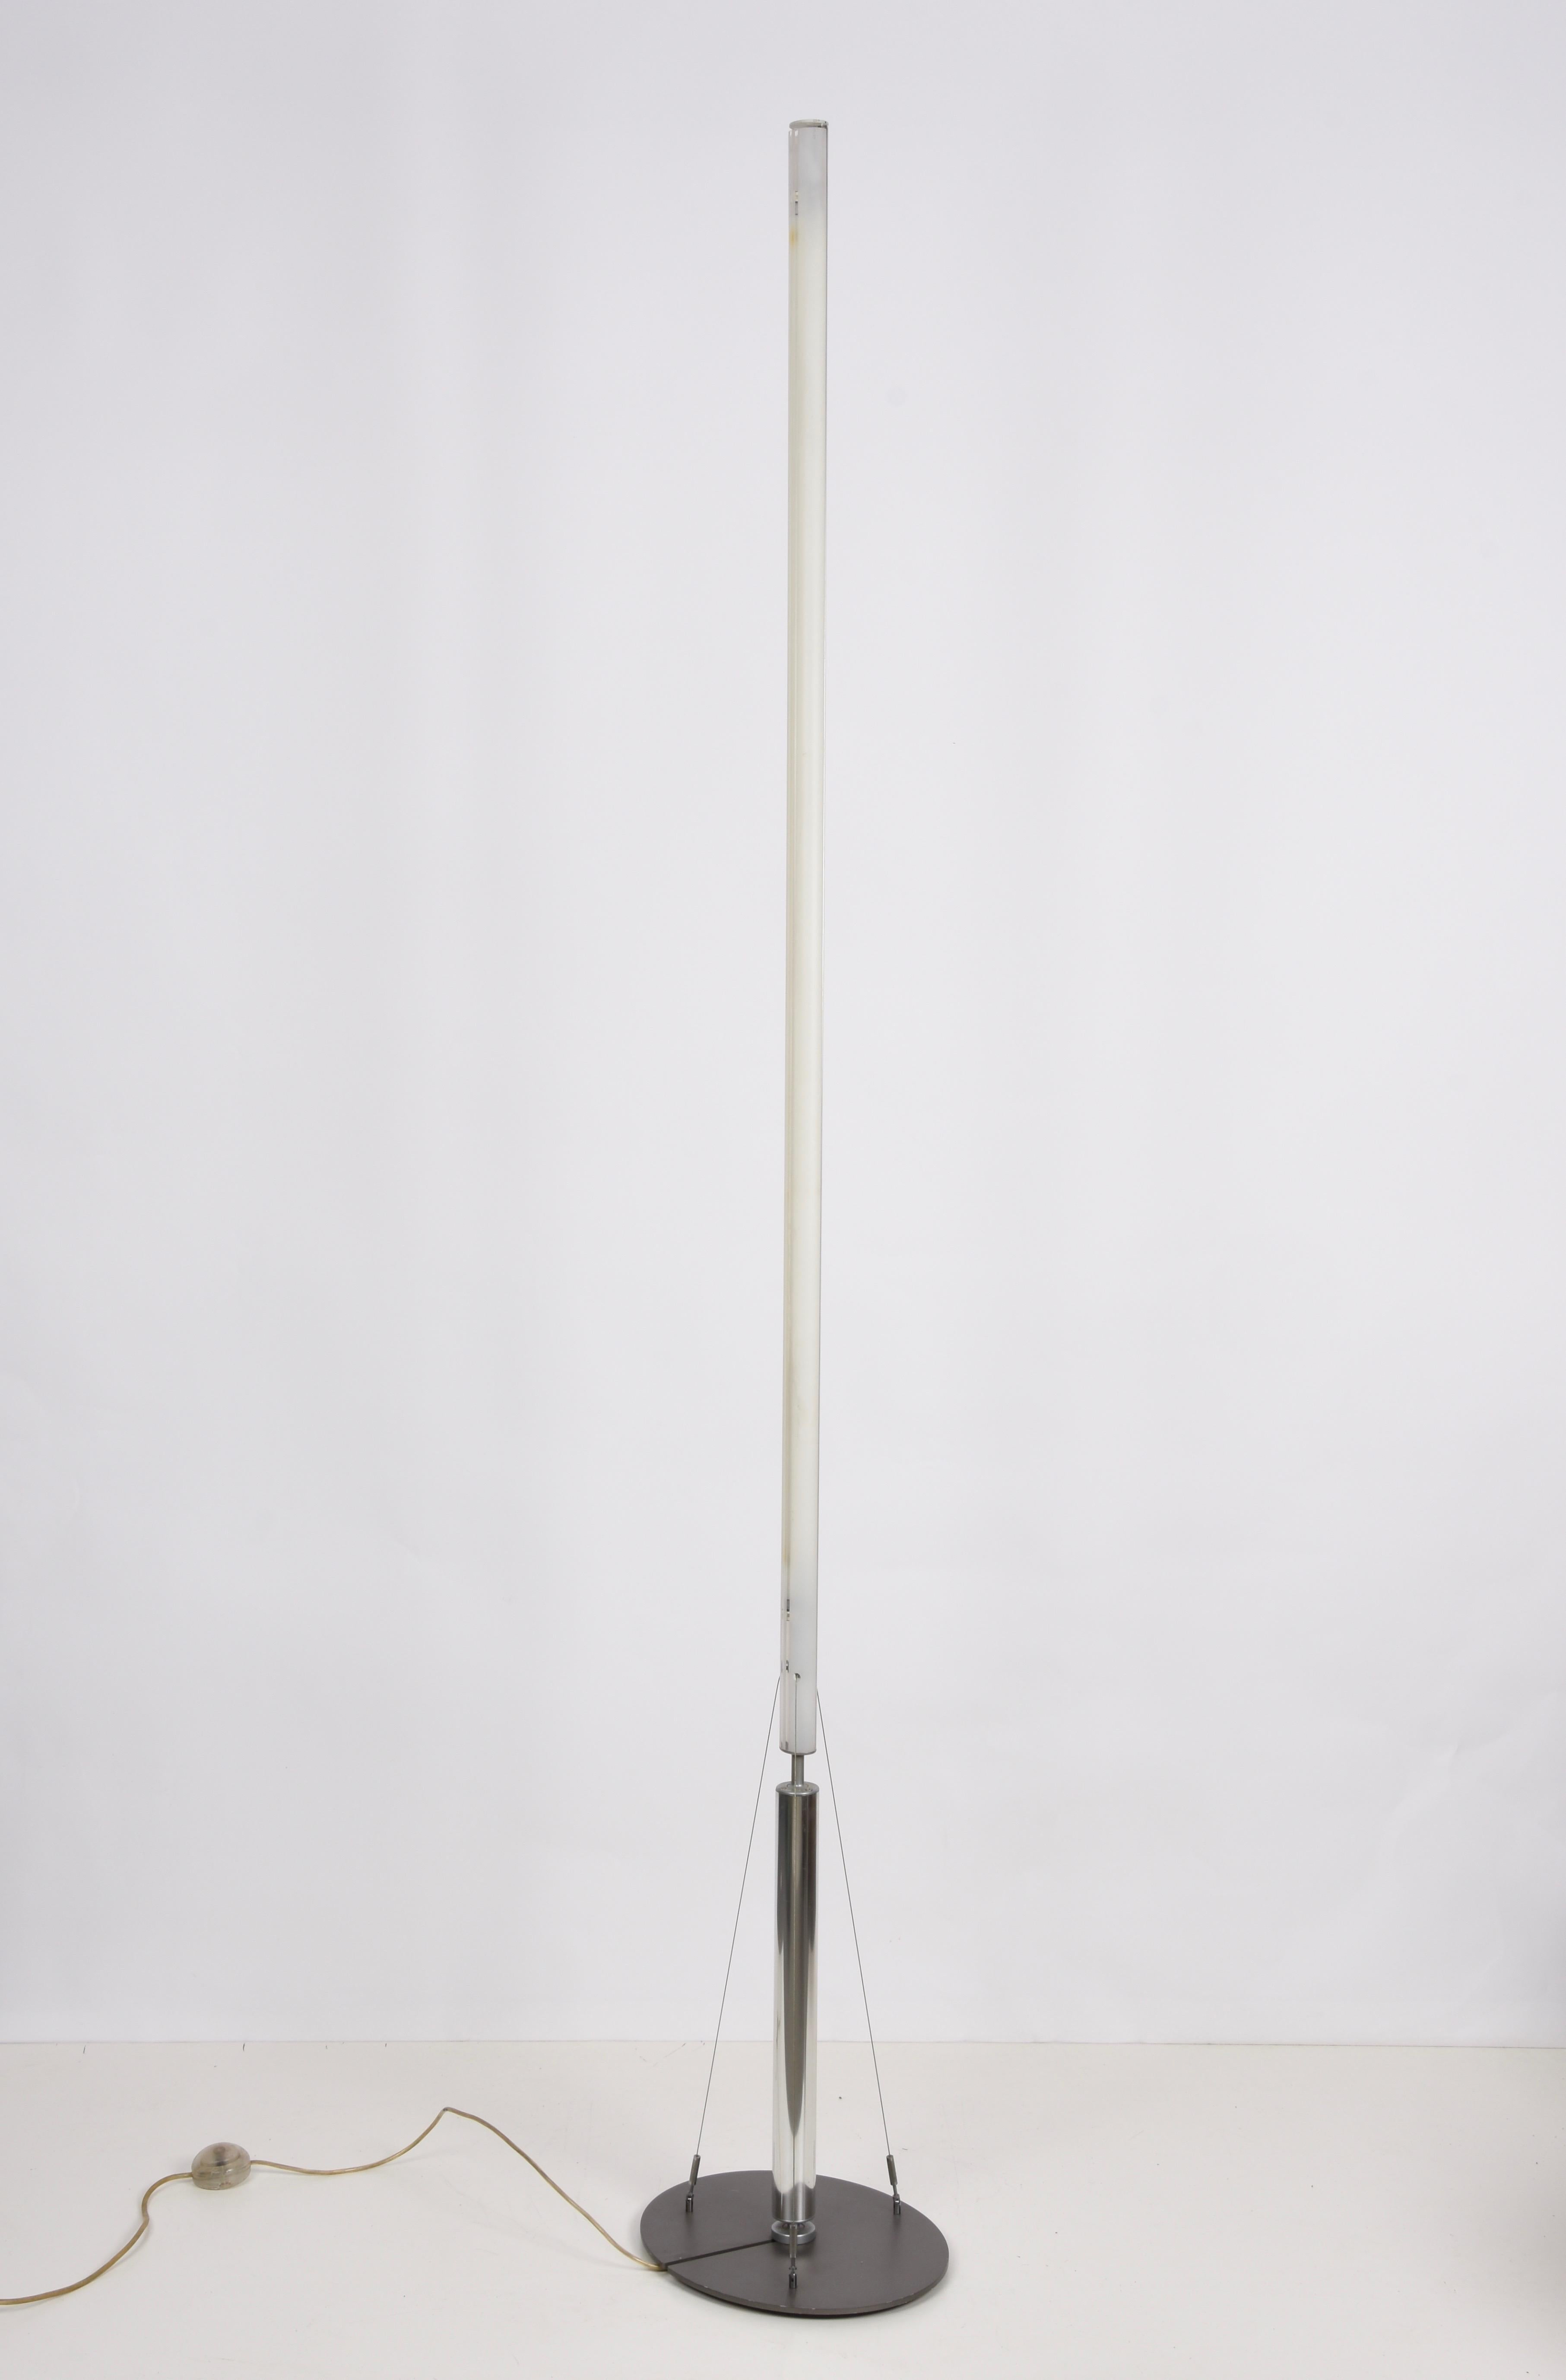 Fassina & Forcolini Midcentury Chrome Floor Lamp for Italiana Luce, Italy, 1980s For Sale 4